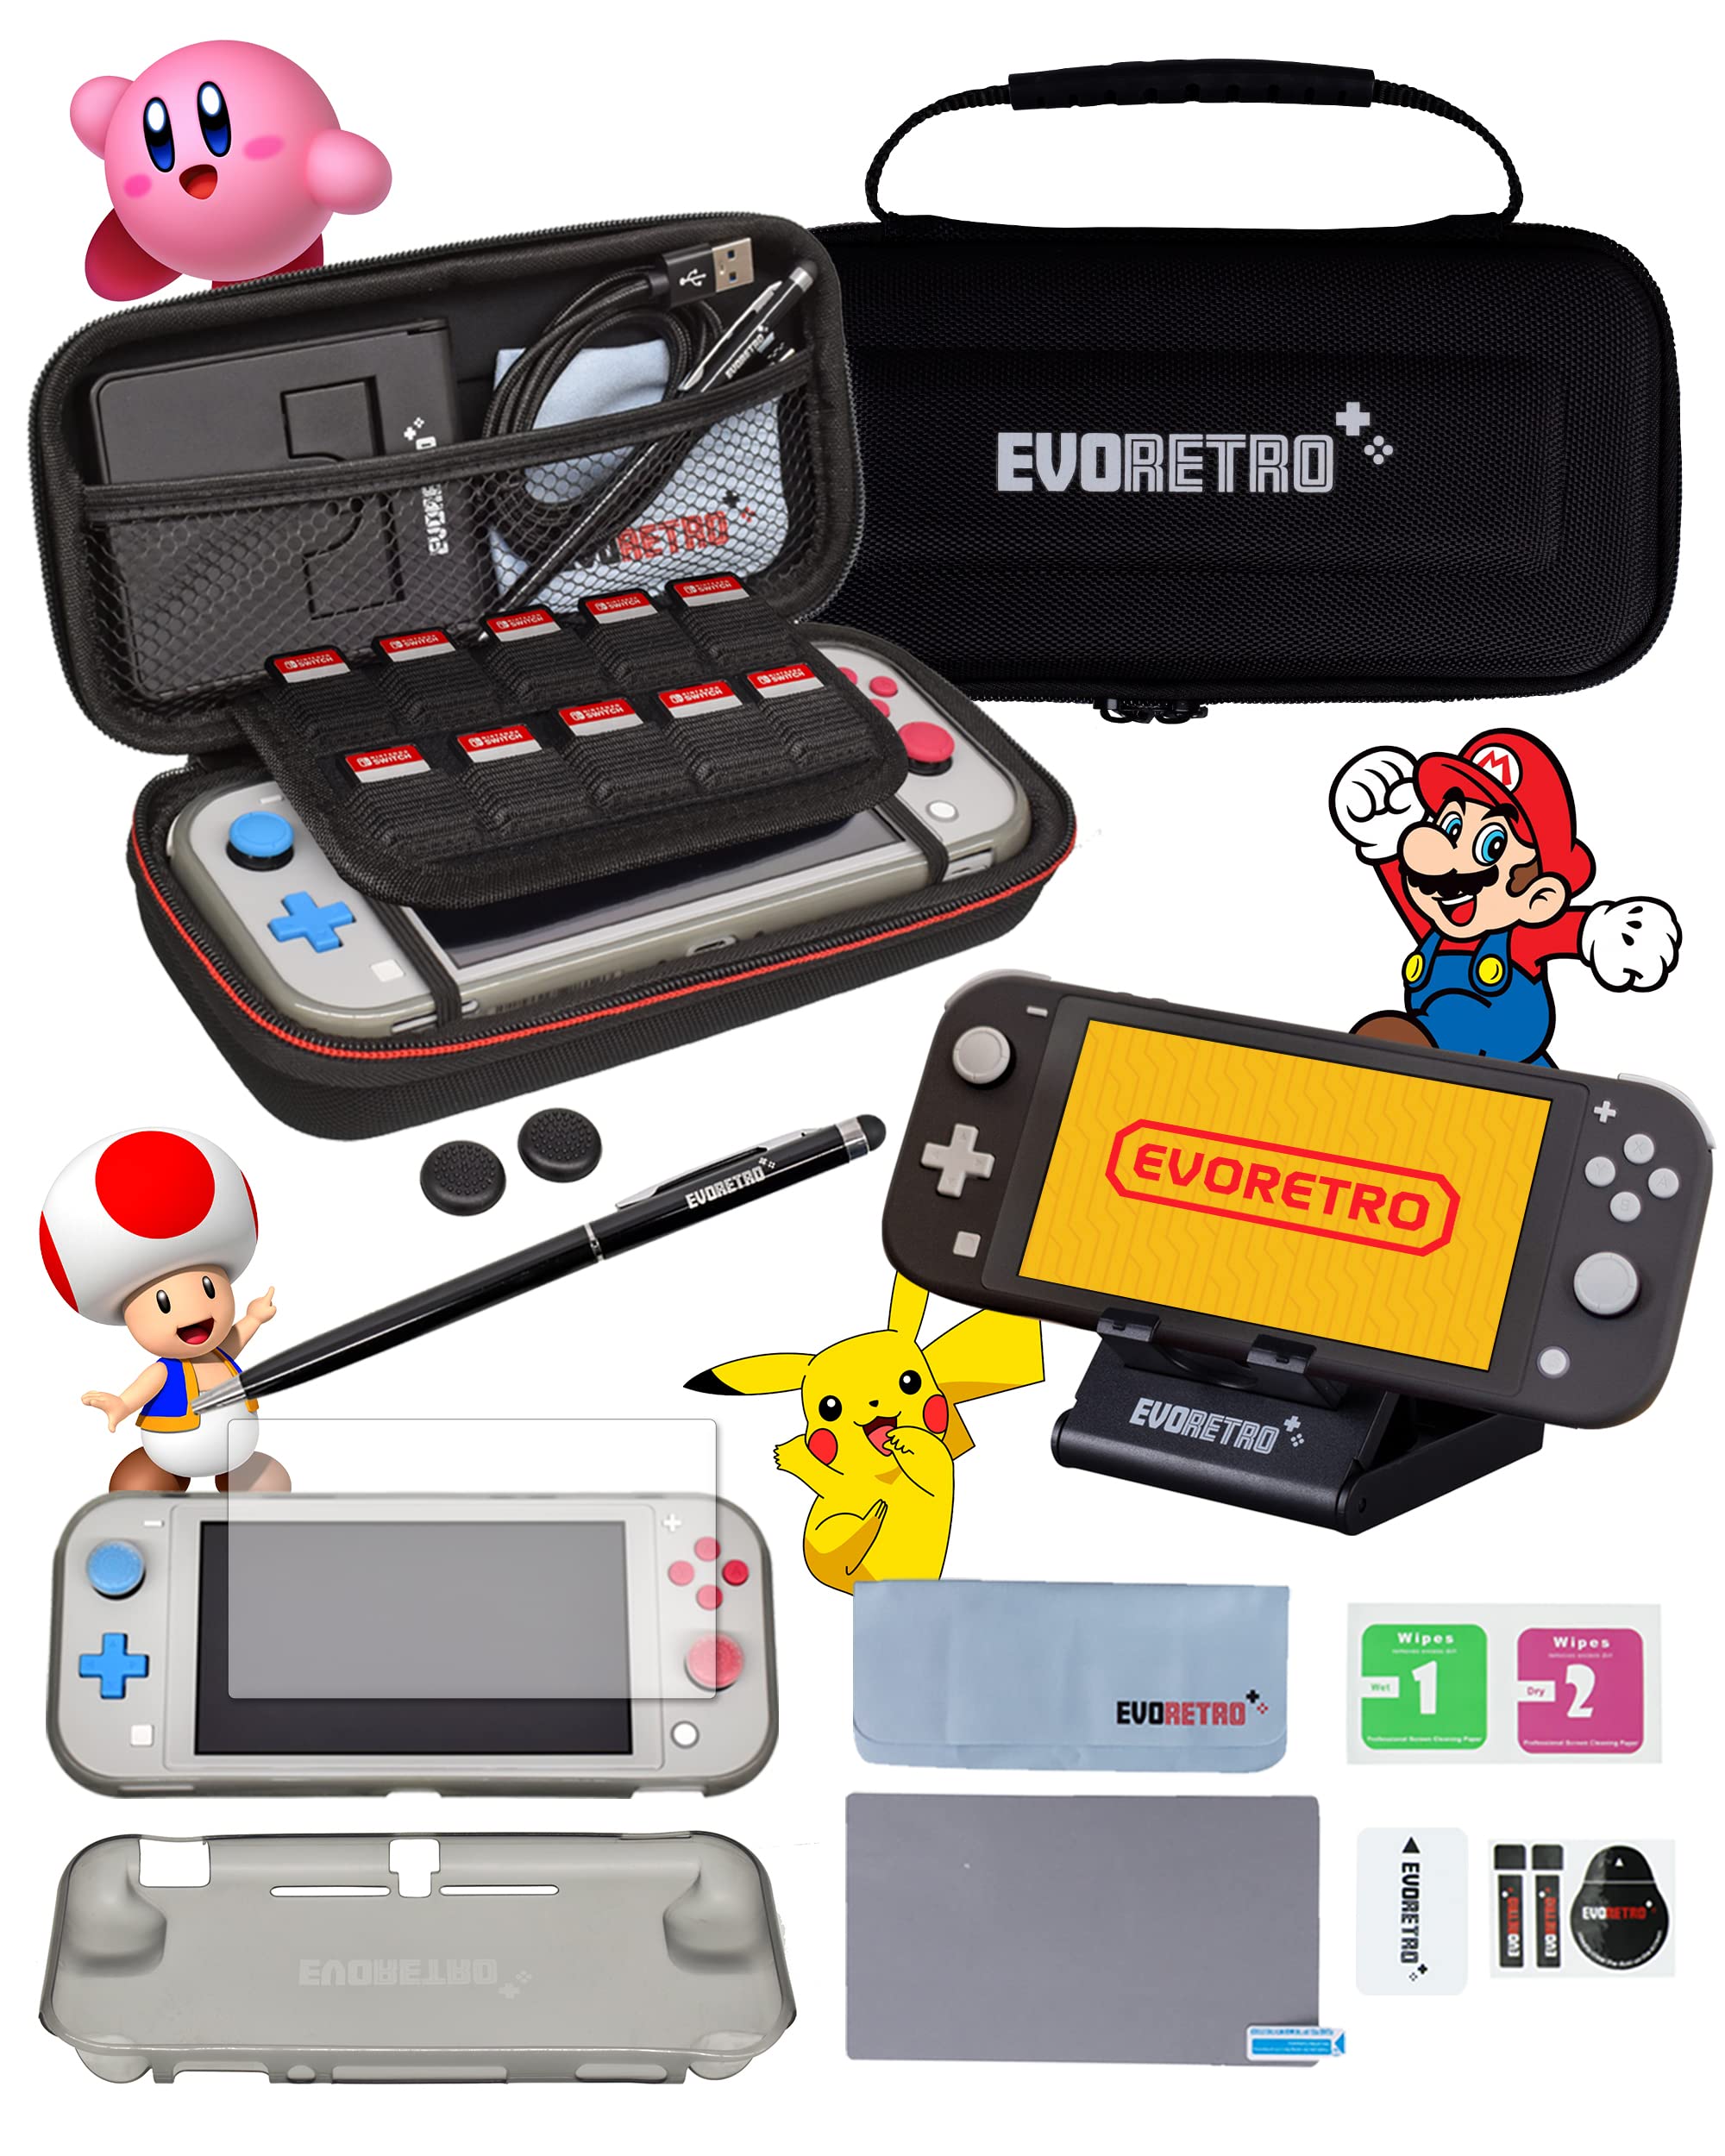 Switch lite case accessories Bundle with Nintendo switch lite case, Nintendo Switch accessories, for switch lite games! Complete Bundle (Black) by EVORETRO